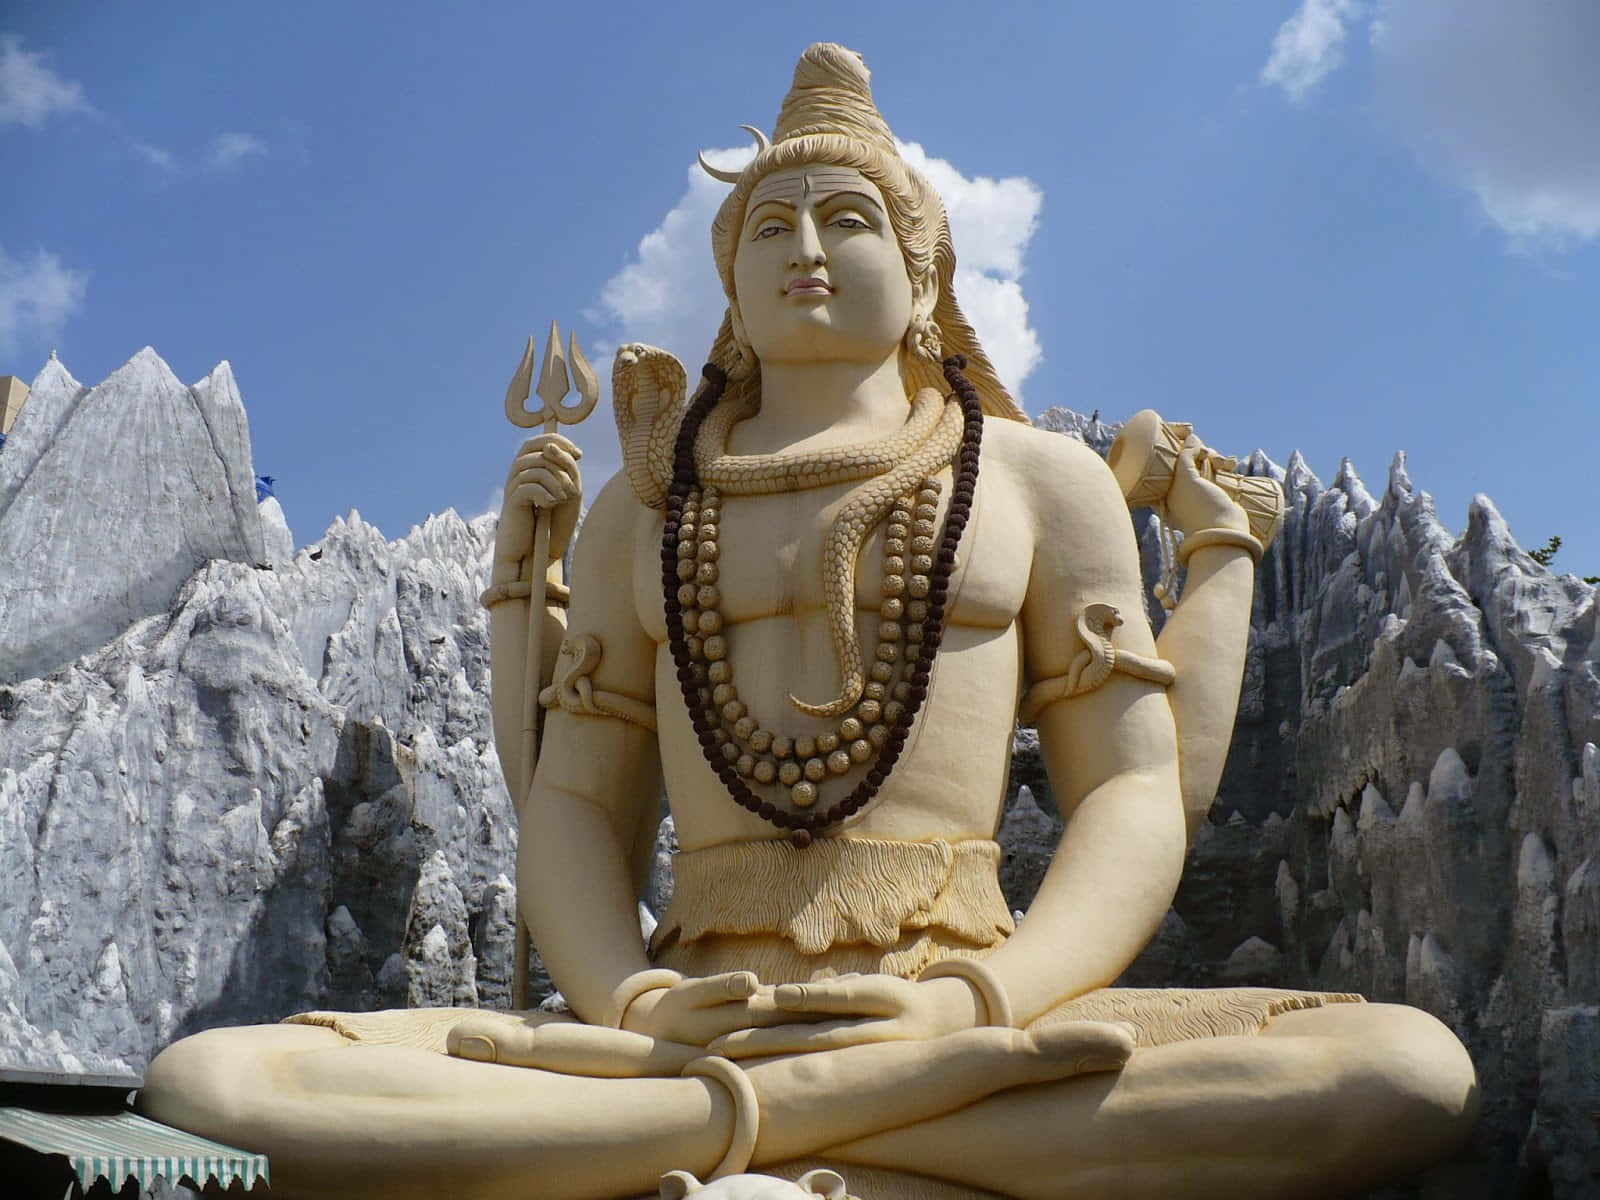 Enstatue Af Lord Shiva Foran Bjerge.